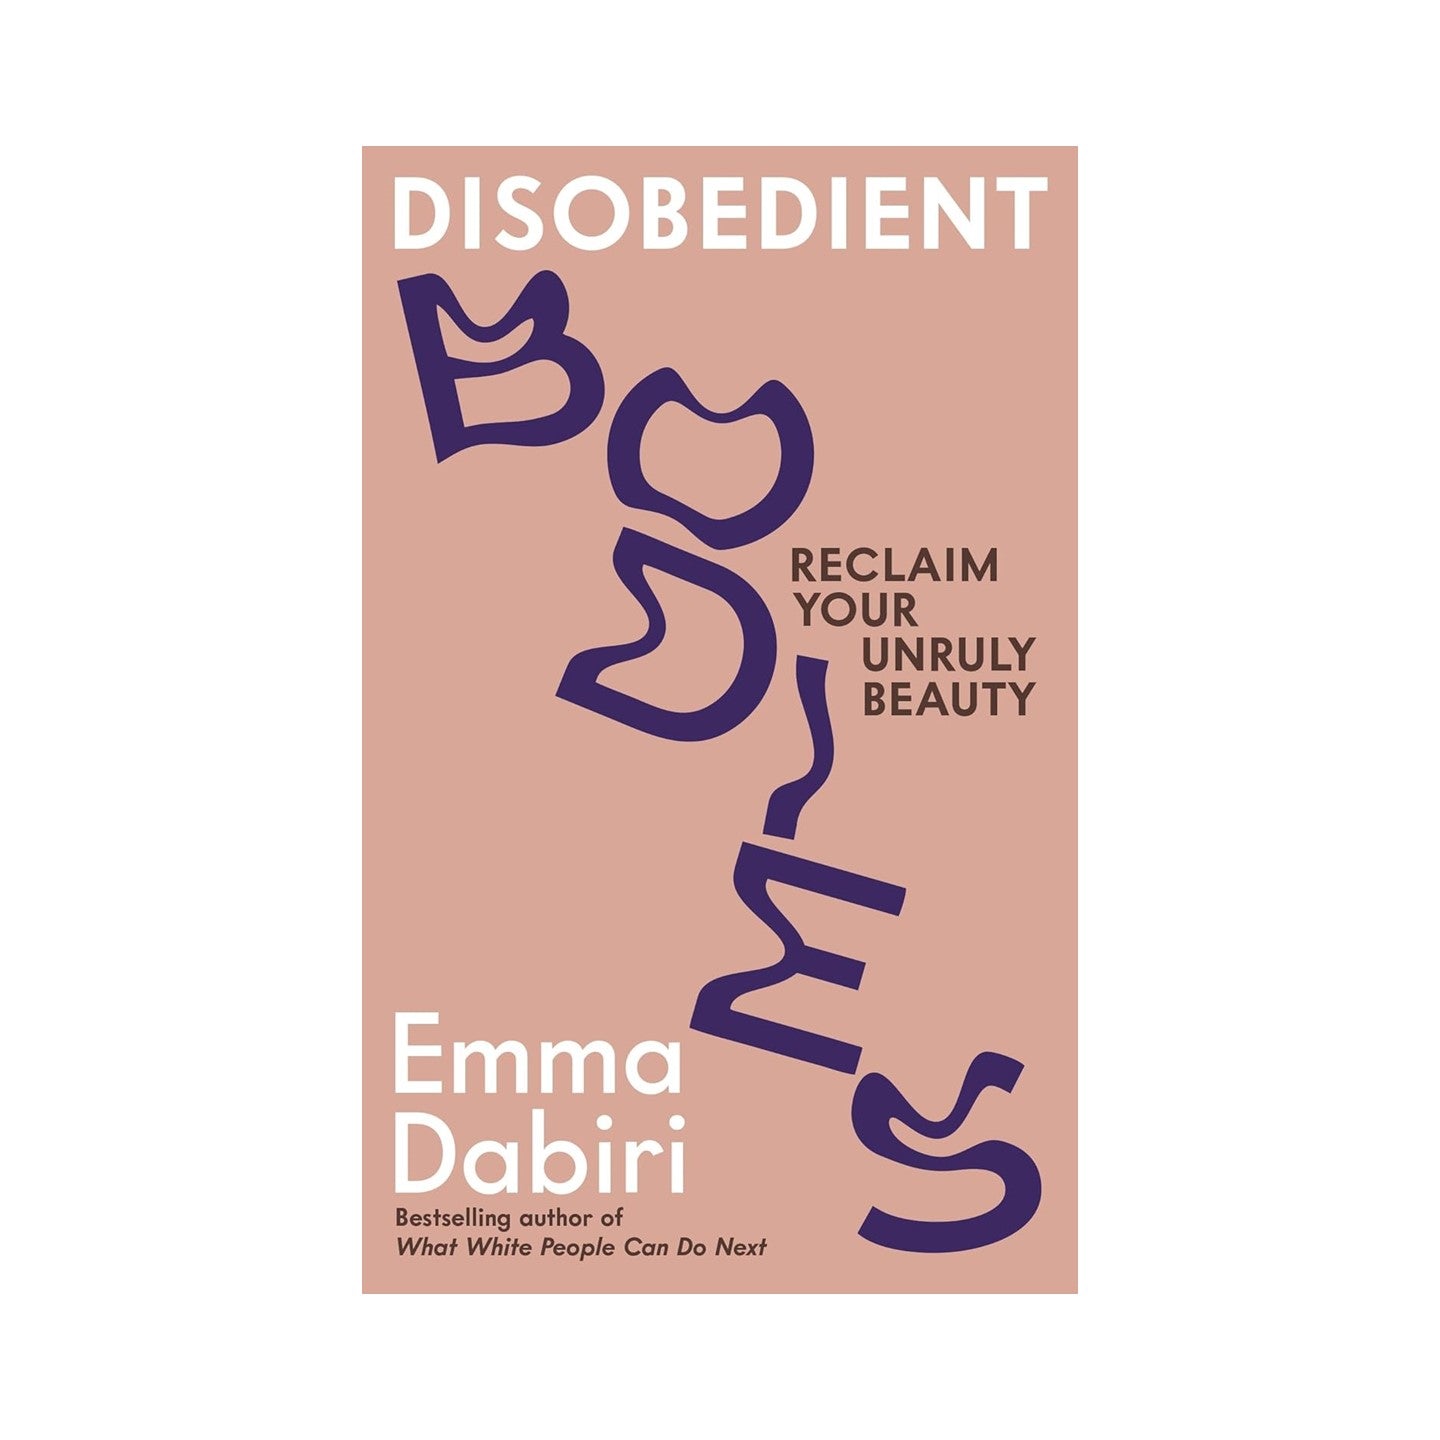 Disobedient Bodies by Emma Dabiri